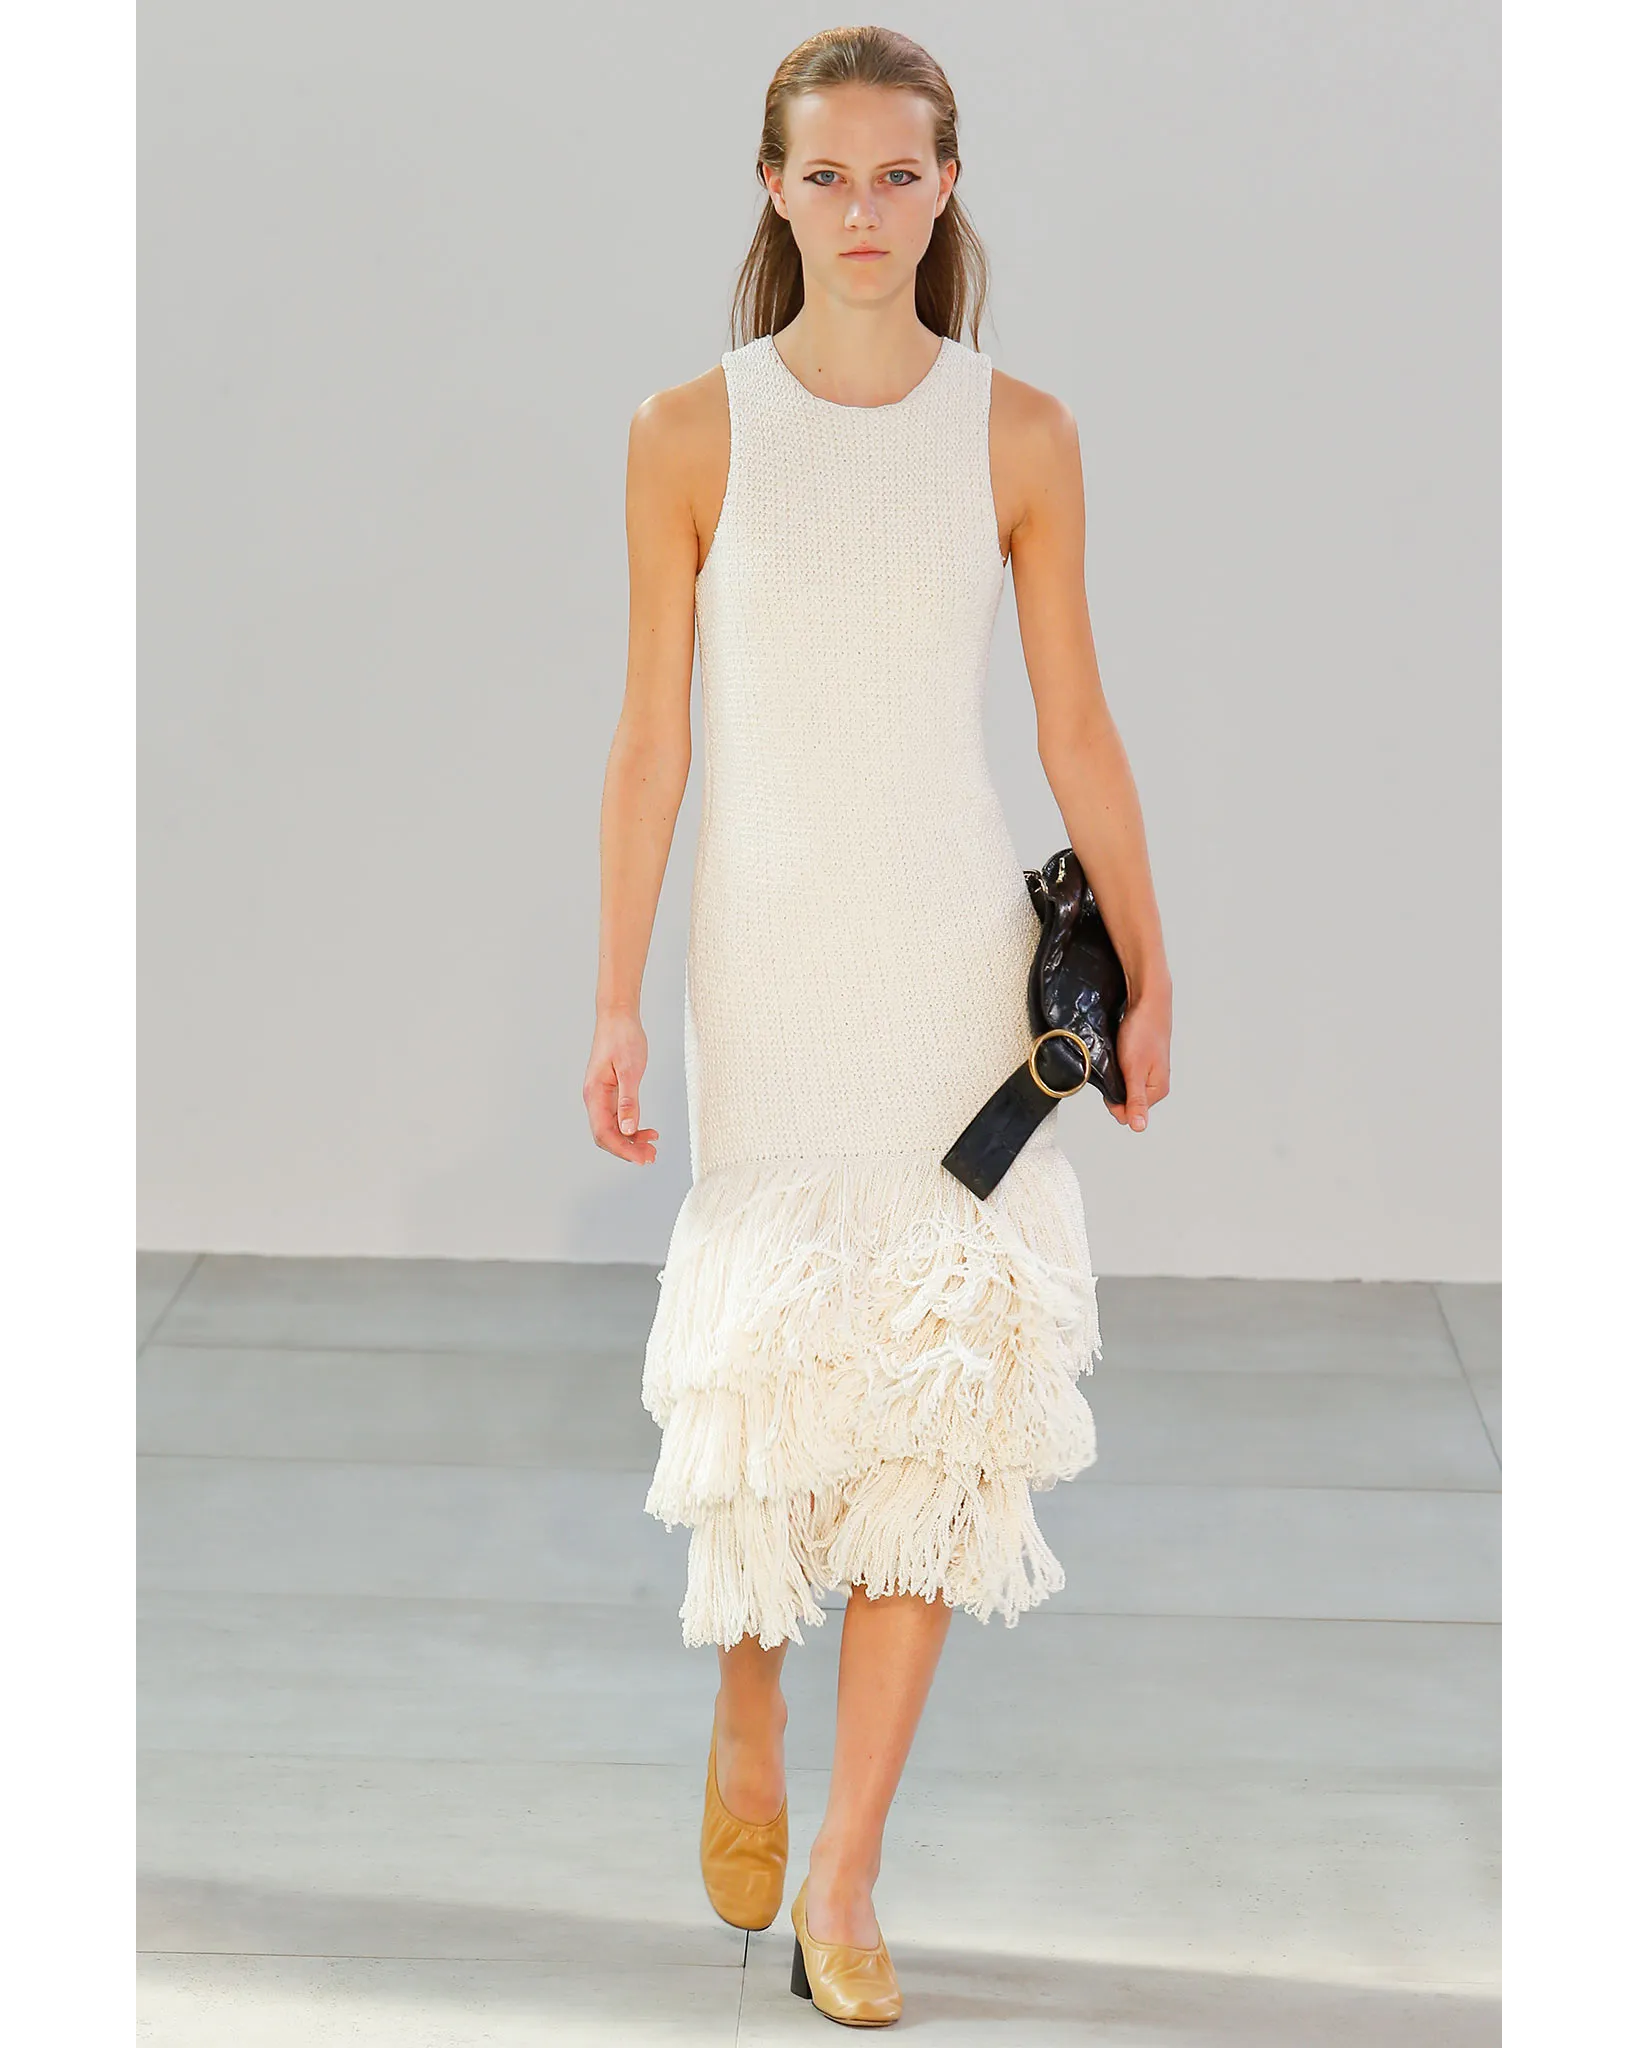 S/S 2015 White Textured Silk Midi Dress with Fringe